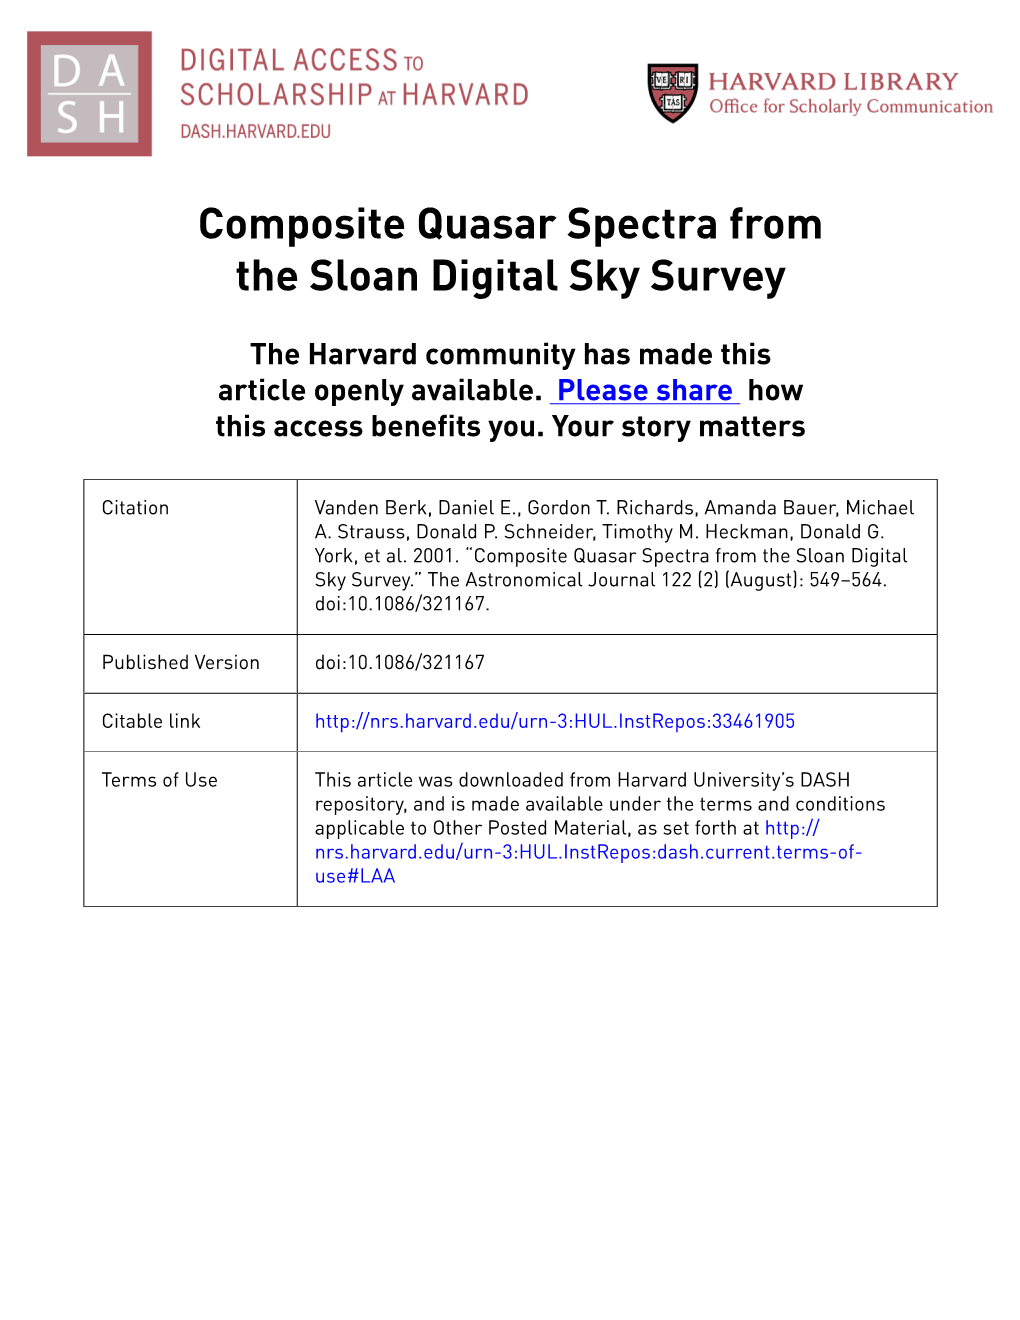 Composite Quasar Spectra from the Sloan Digital Sky Survey